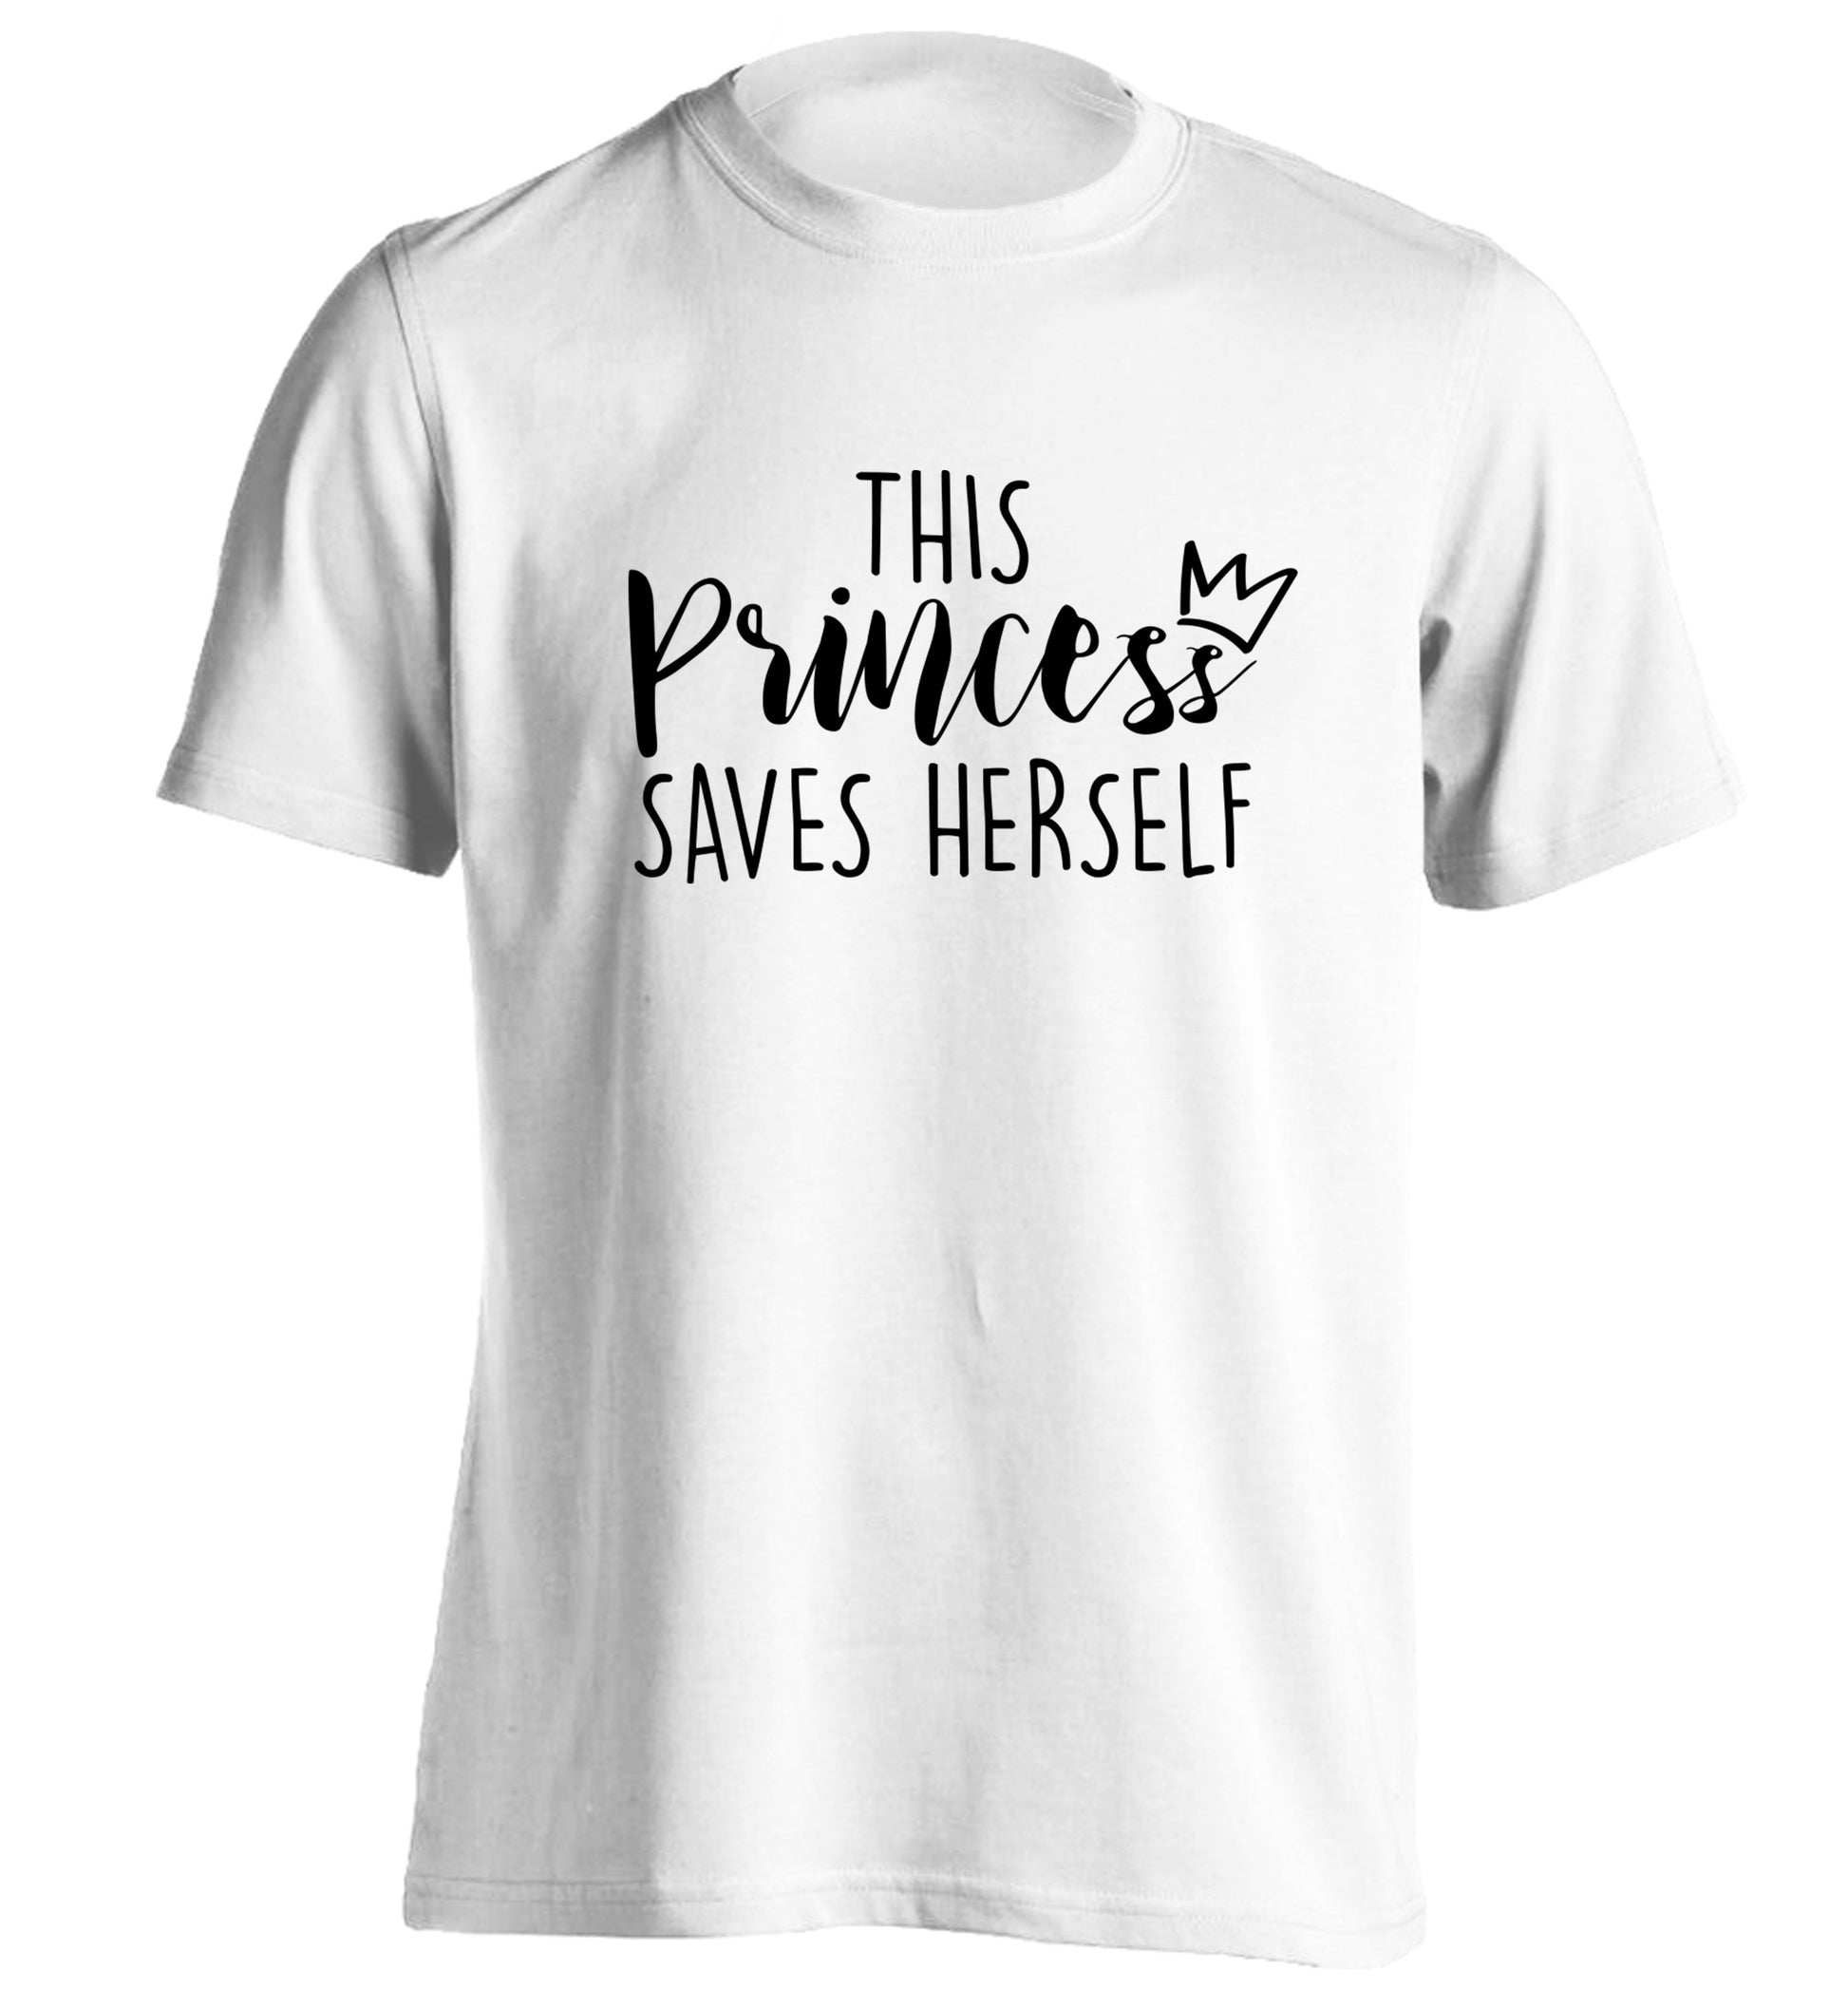 This princess saves herself adults unisex white Tshirt 2XL